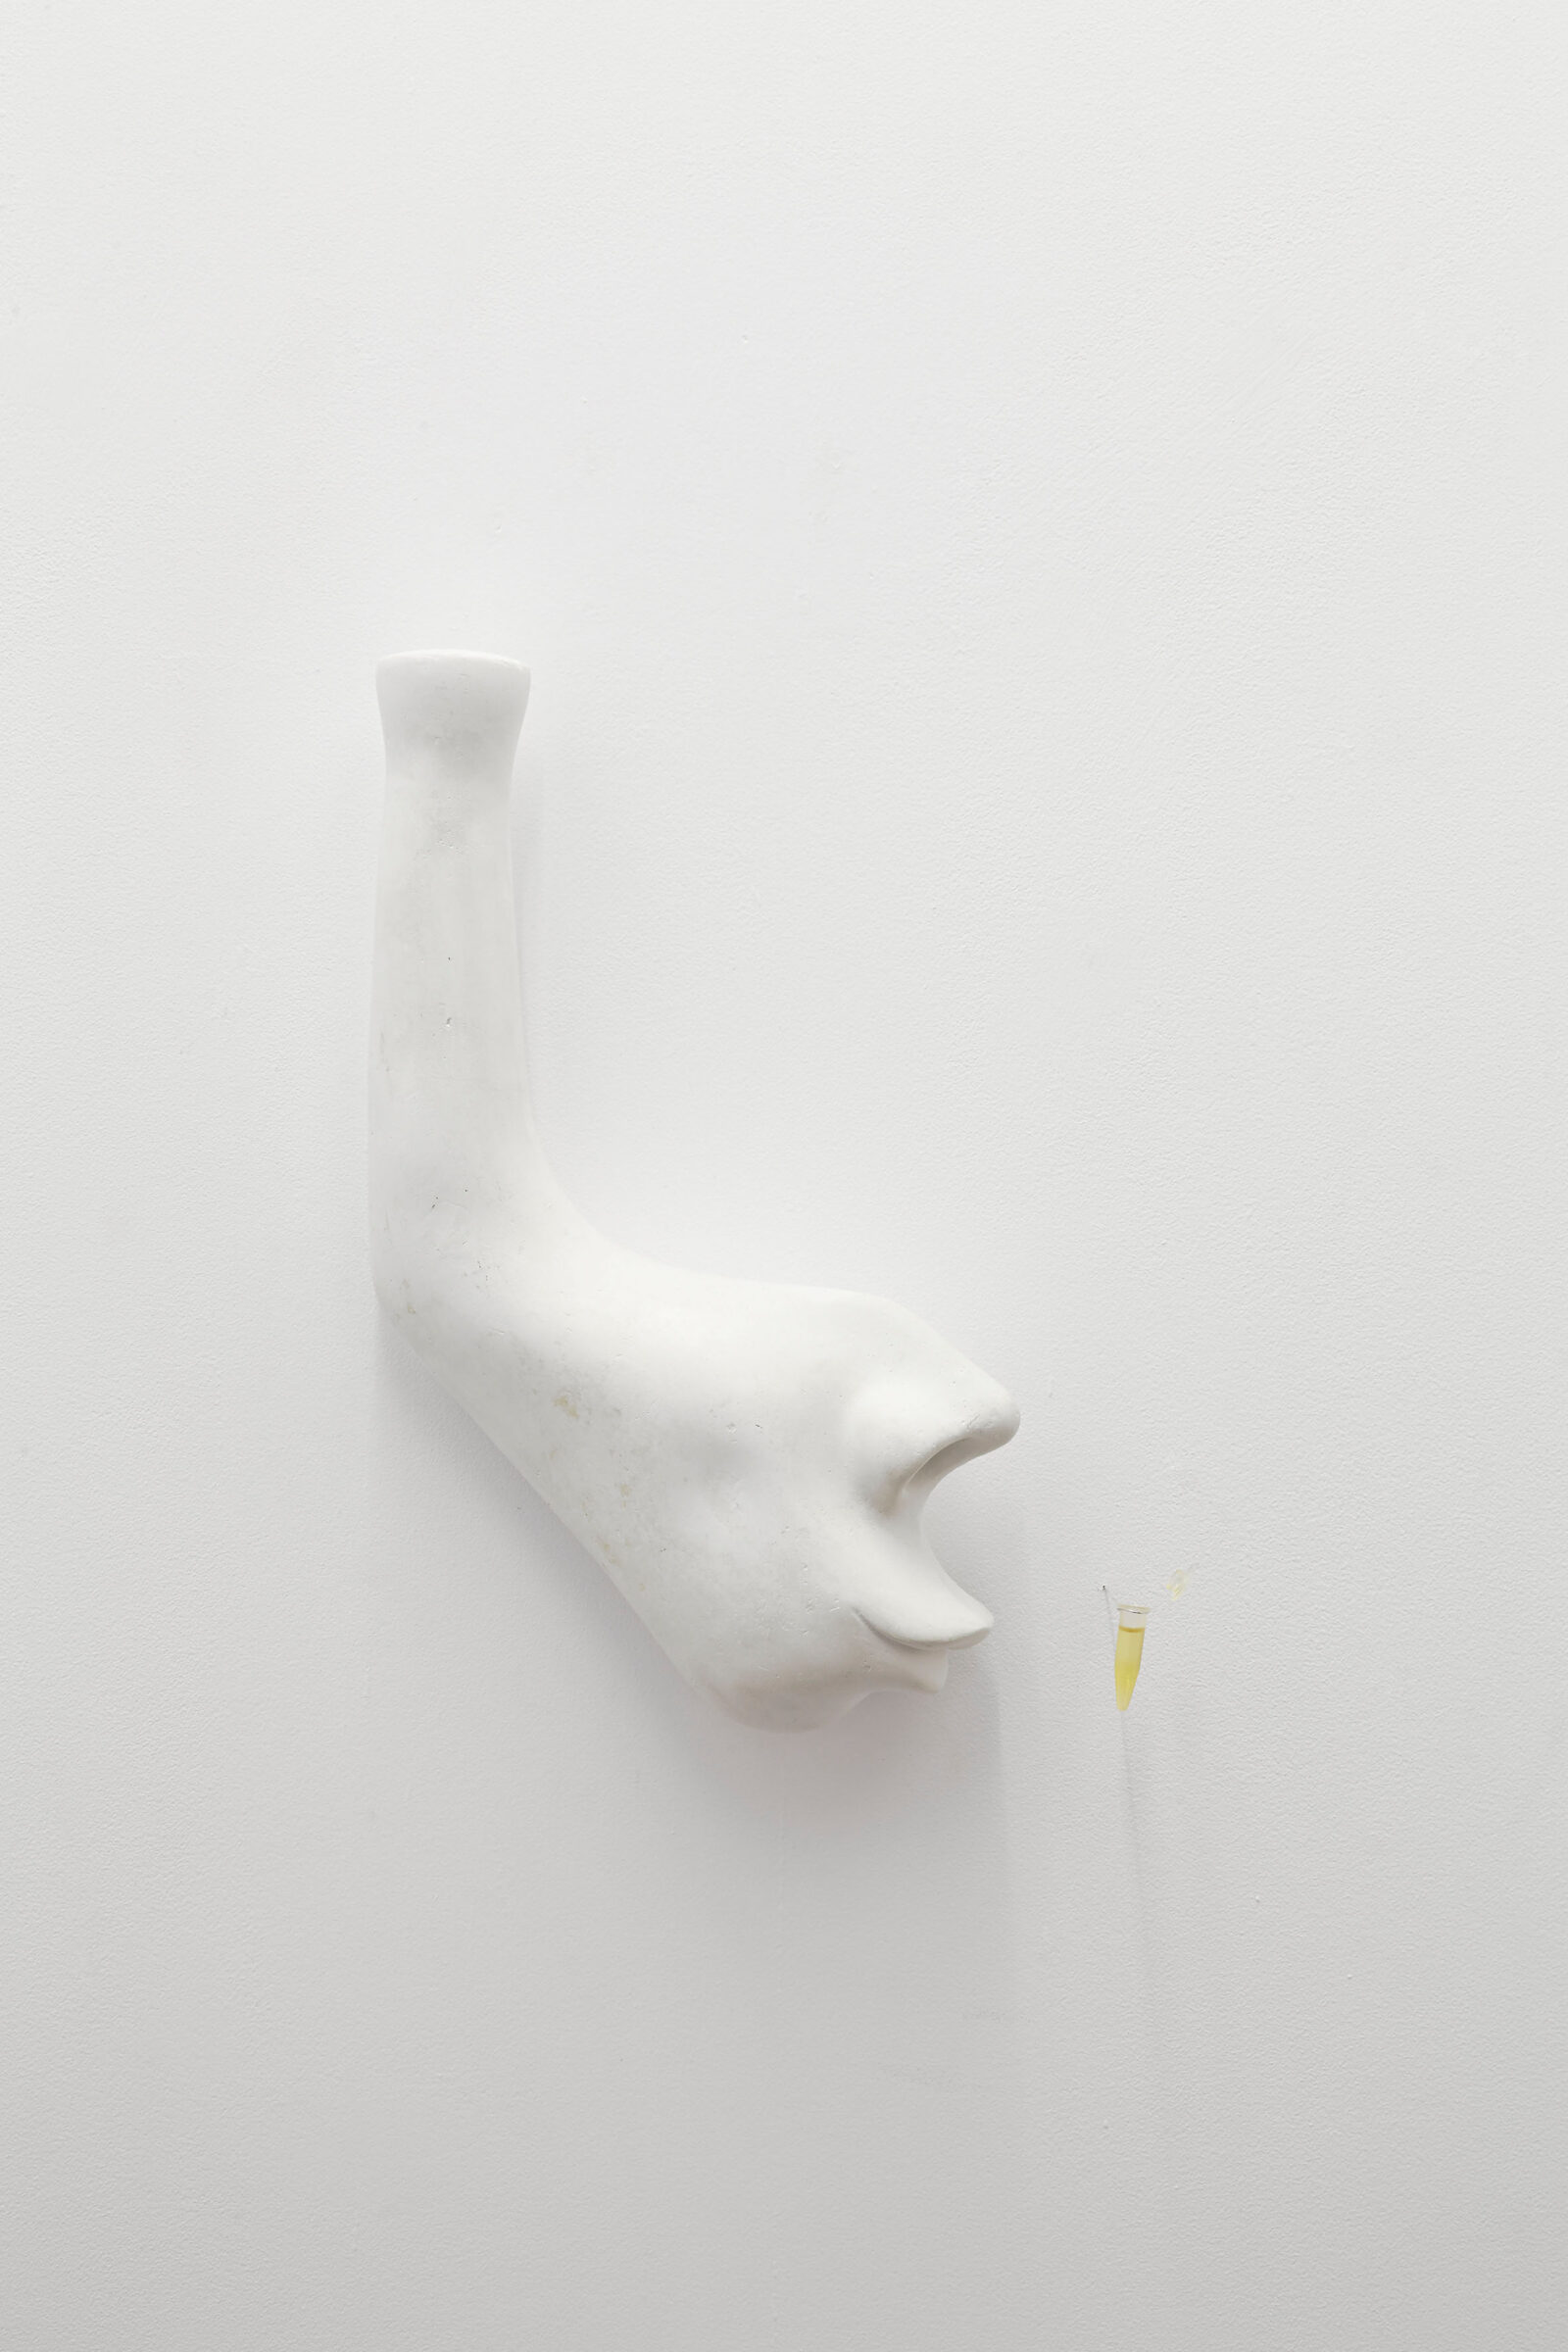 Sebastian Buczek
Nose
2014
plaster, fragrance composition